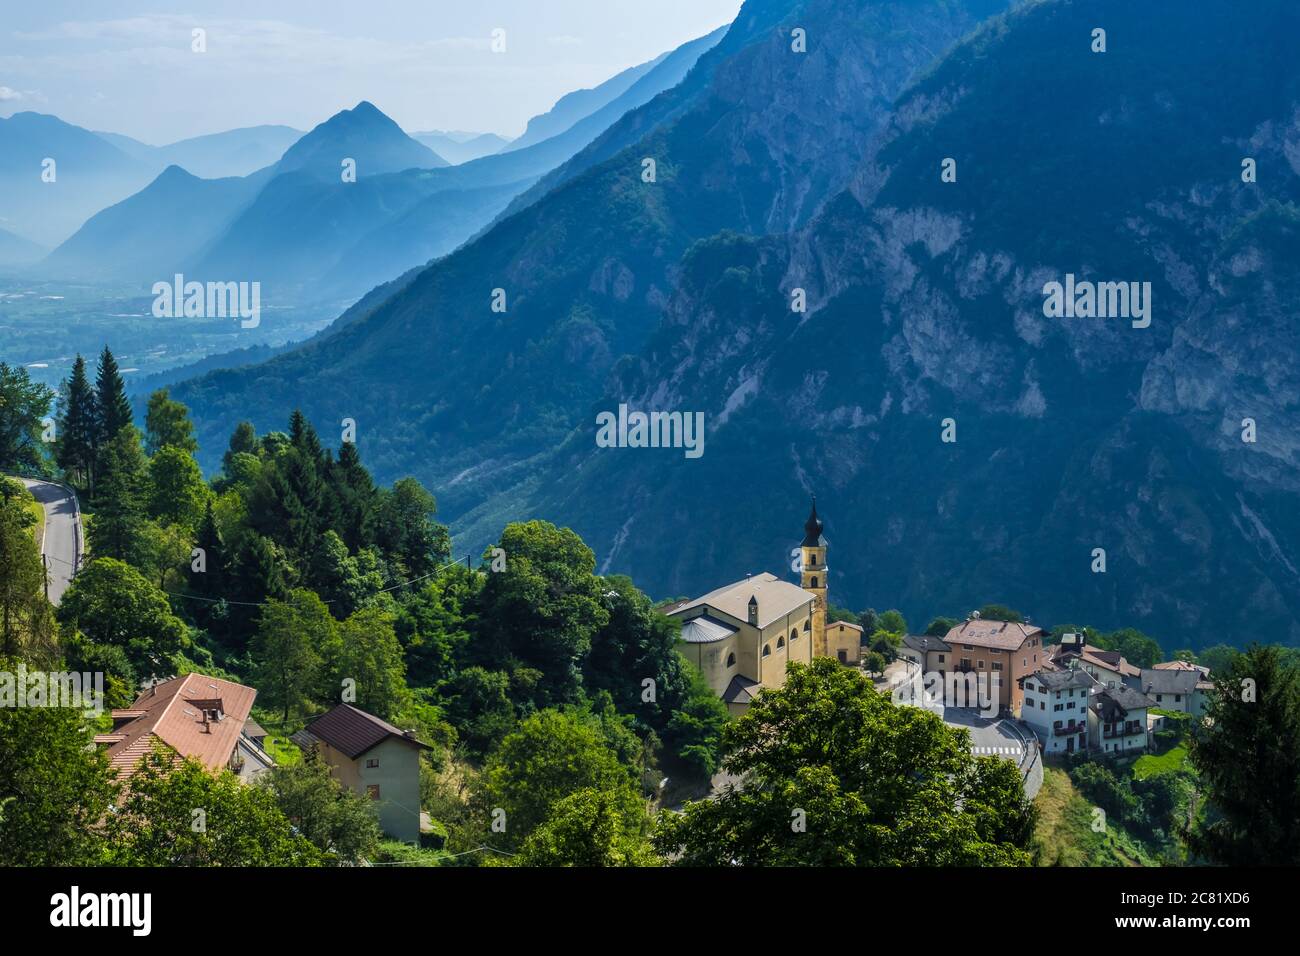 Pergine Valsugana, Italy - August 12, 2019: Village under mountain range and small town in valle of Italian Alps, Trentino Alto Adige, Trento Province Stock Photo